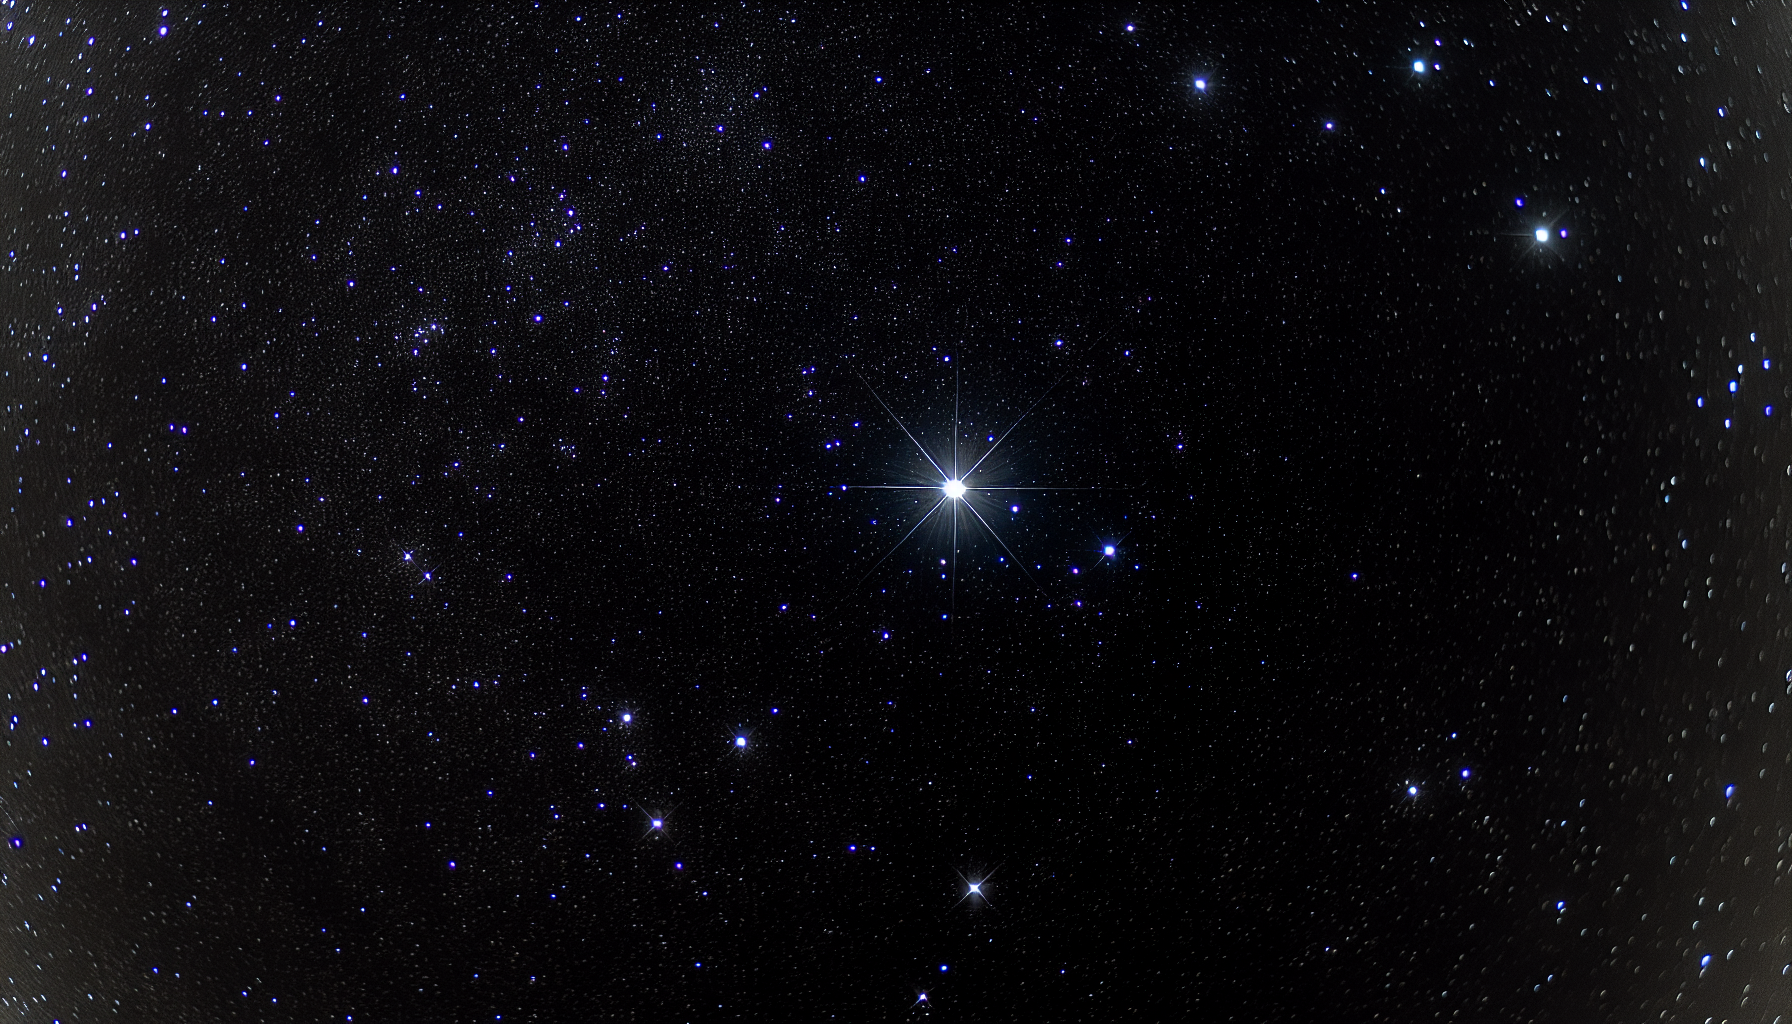 Photo of Polaris, the North Star